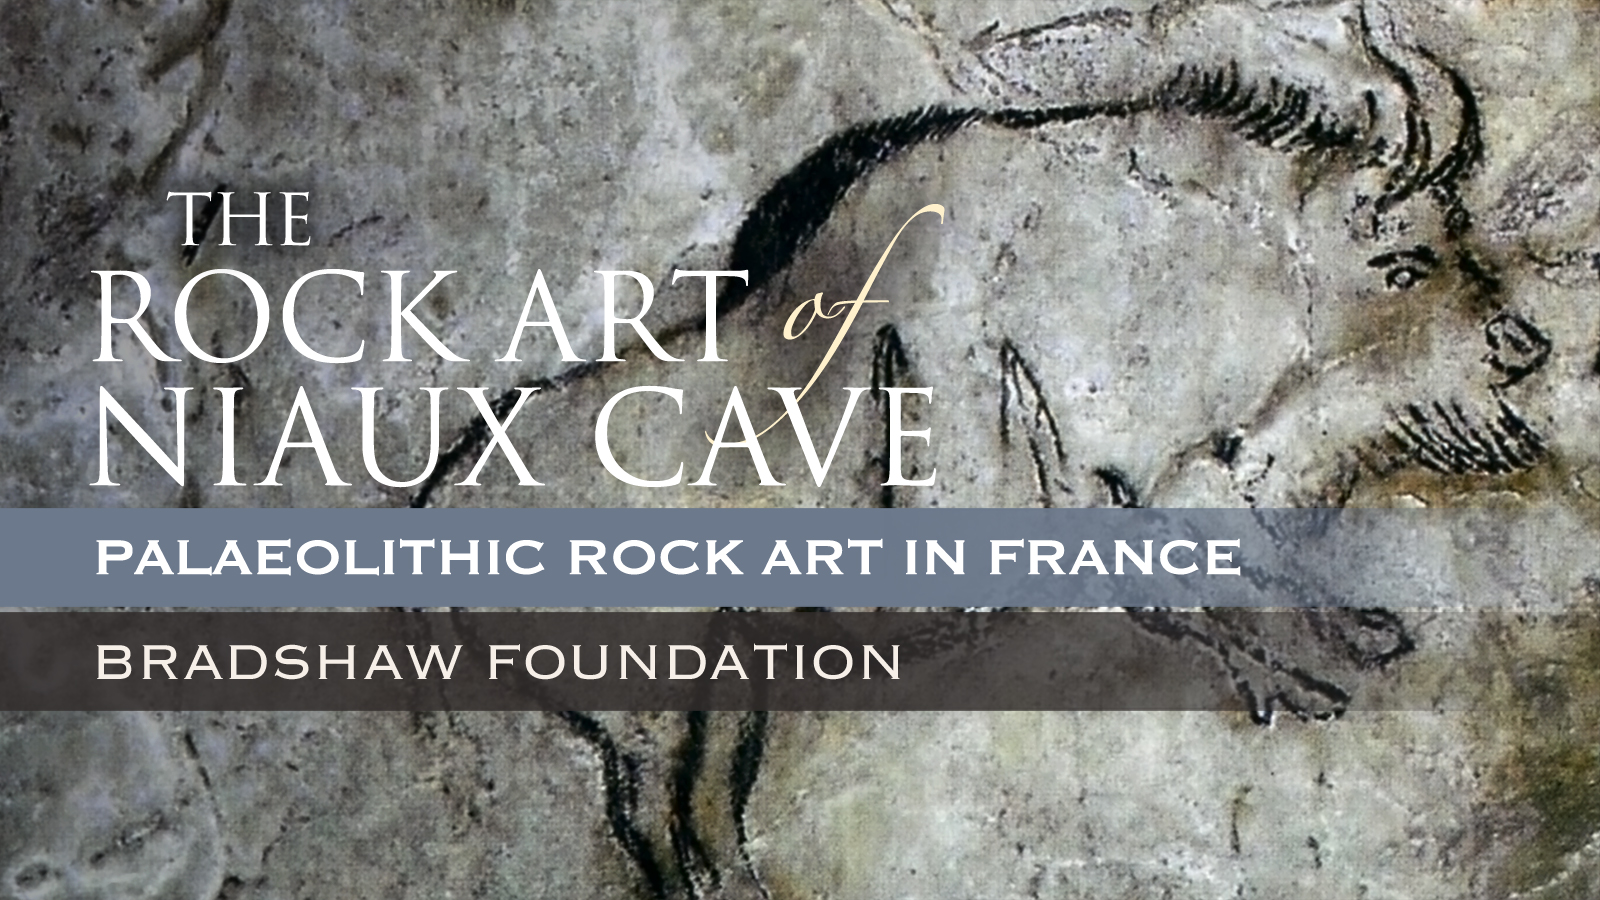 Bradshaw Foundation Palaeolithic Cave Art Paintings Niaux Cave France